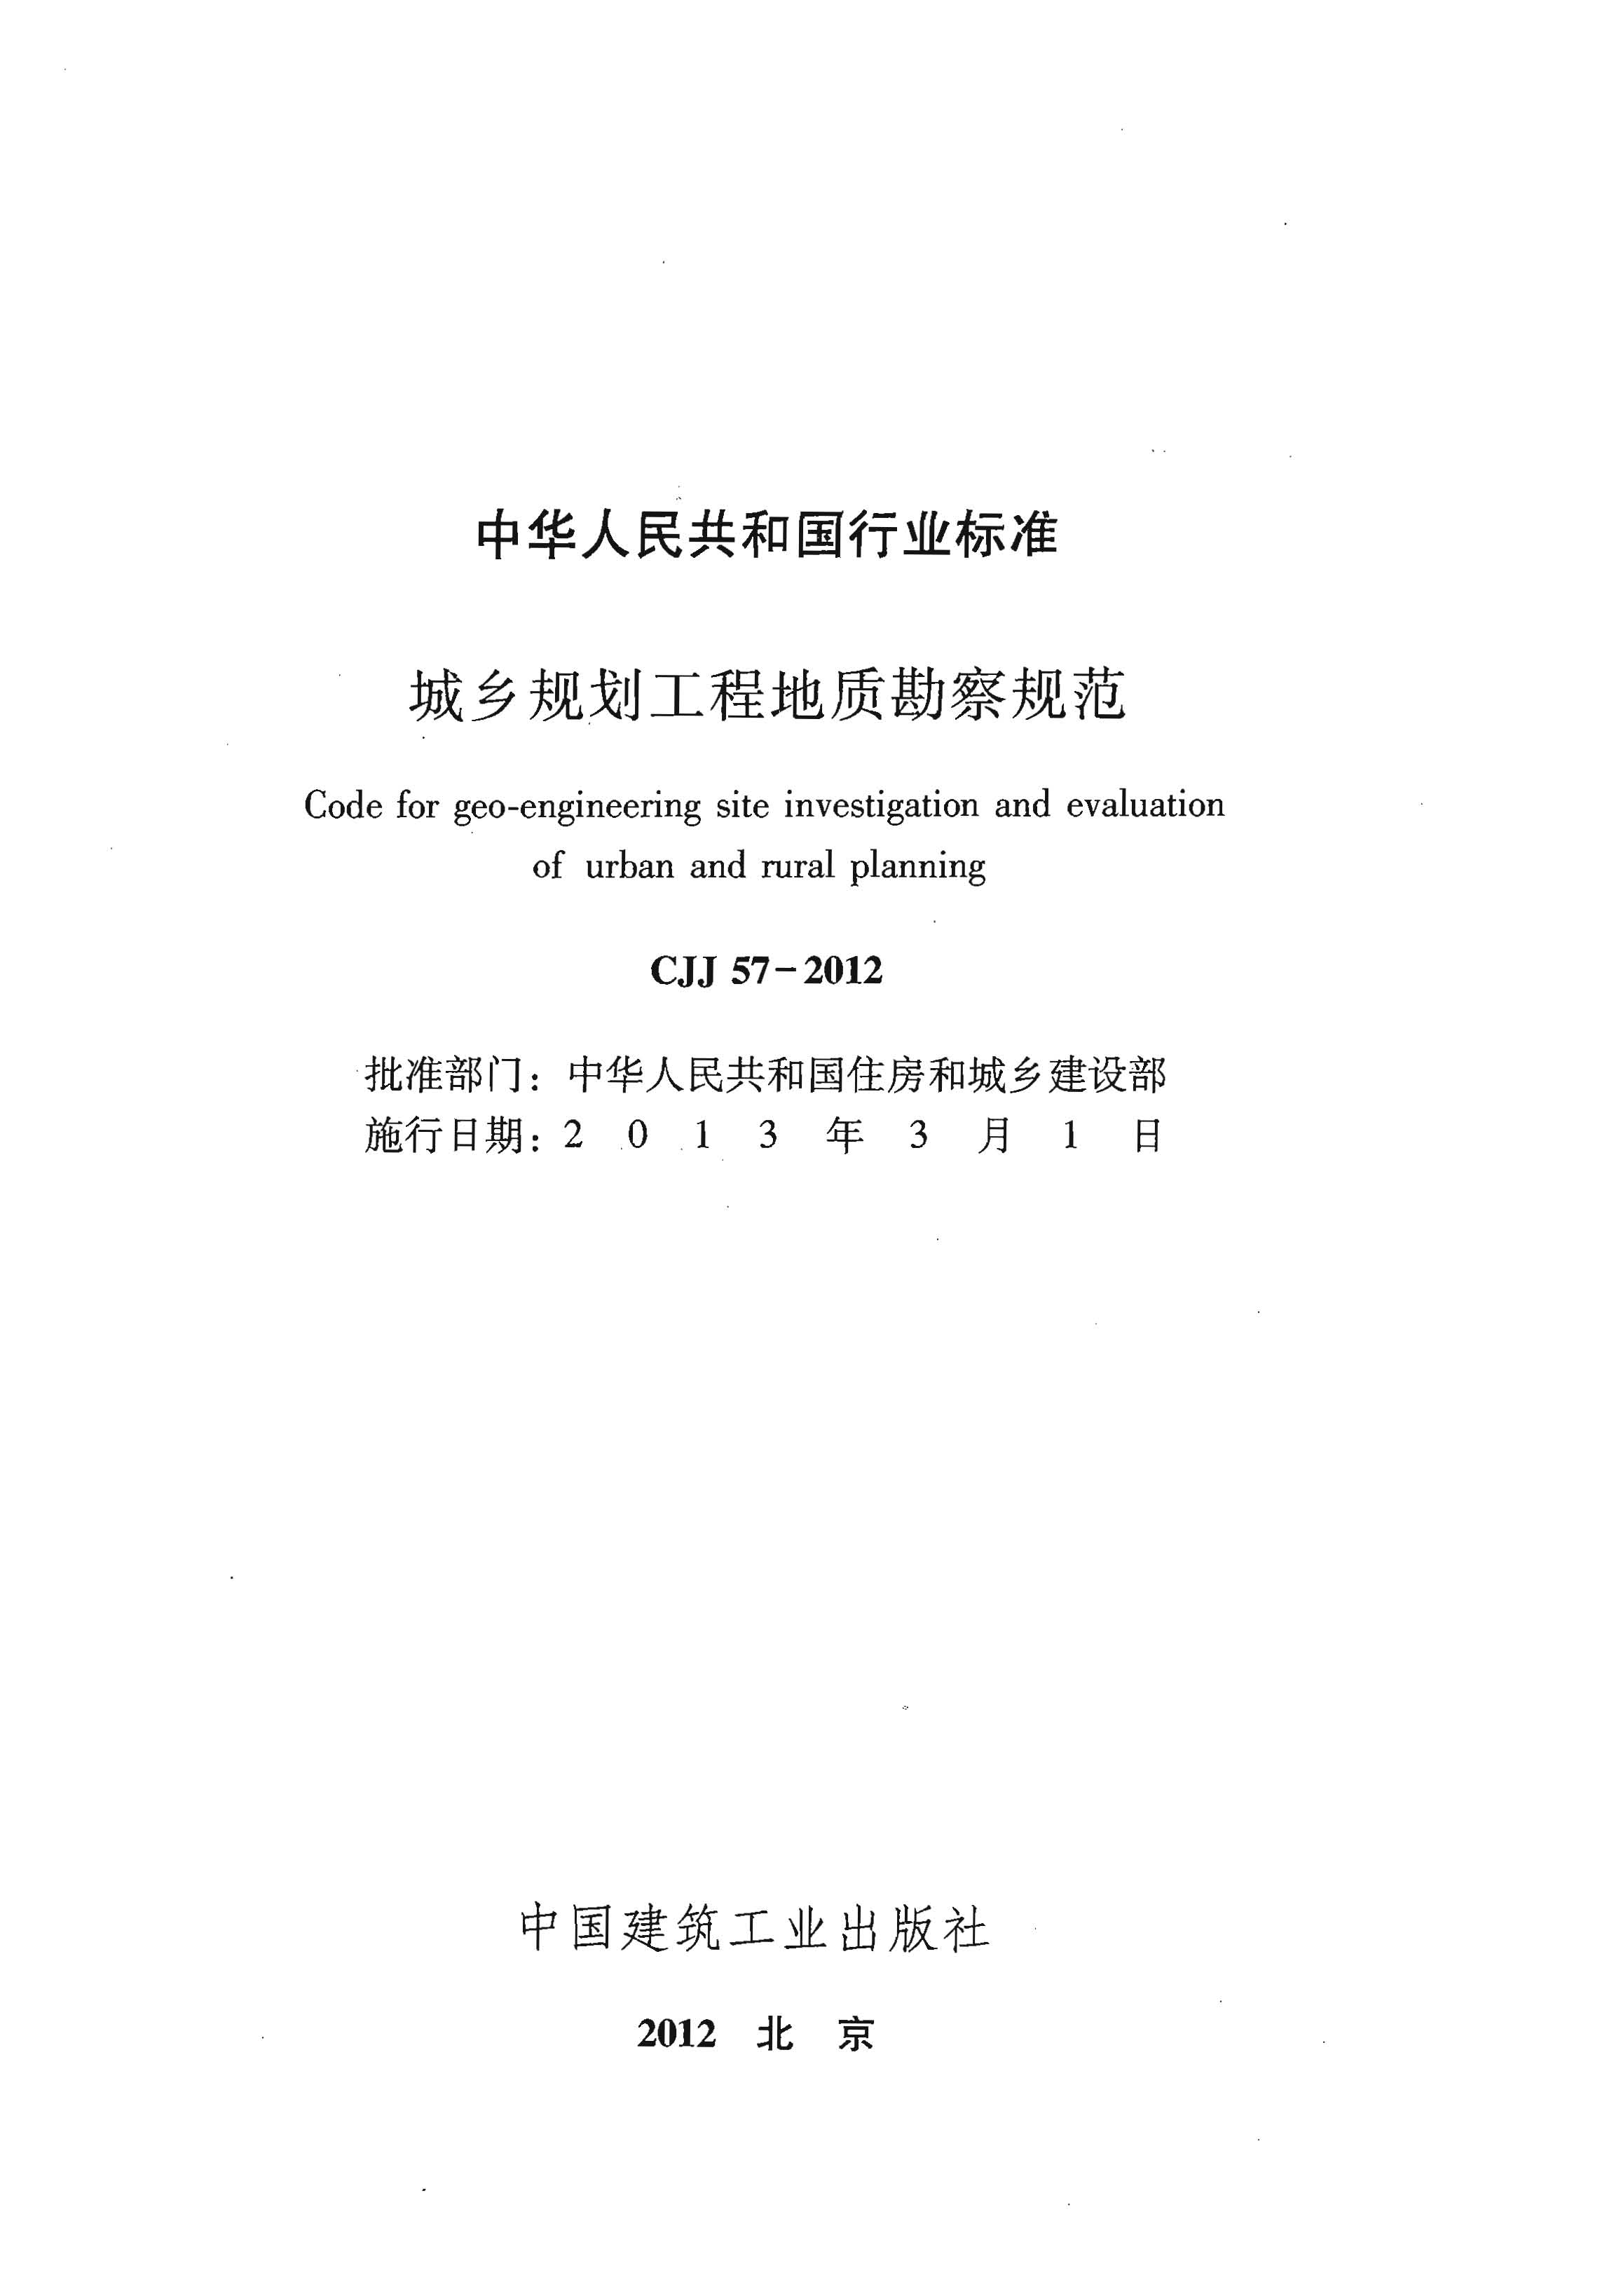 CJJ57-2012城乡规划工程地质勘察规范